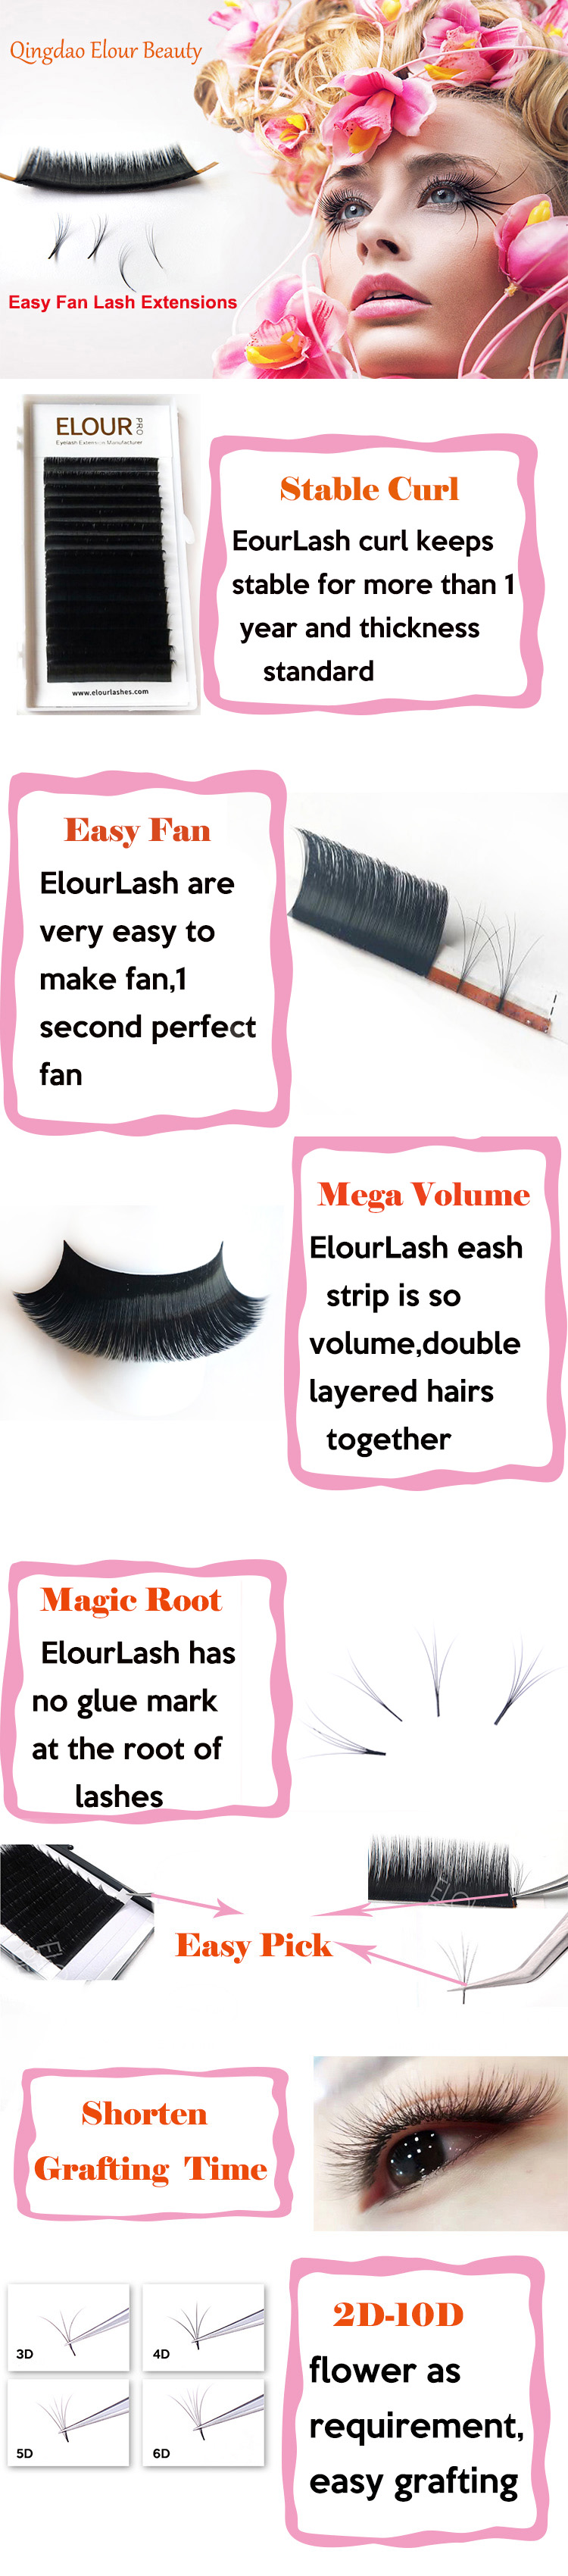 easy-fan-volume-blooming-eyelash-extensions-customized.jpg